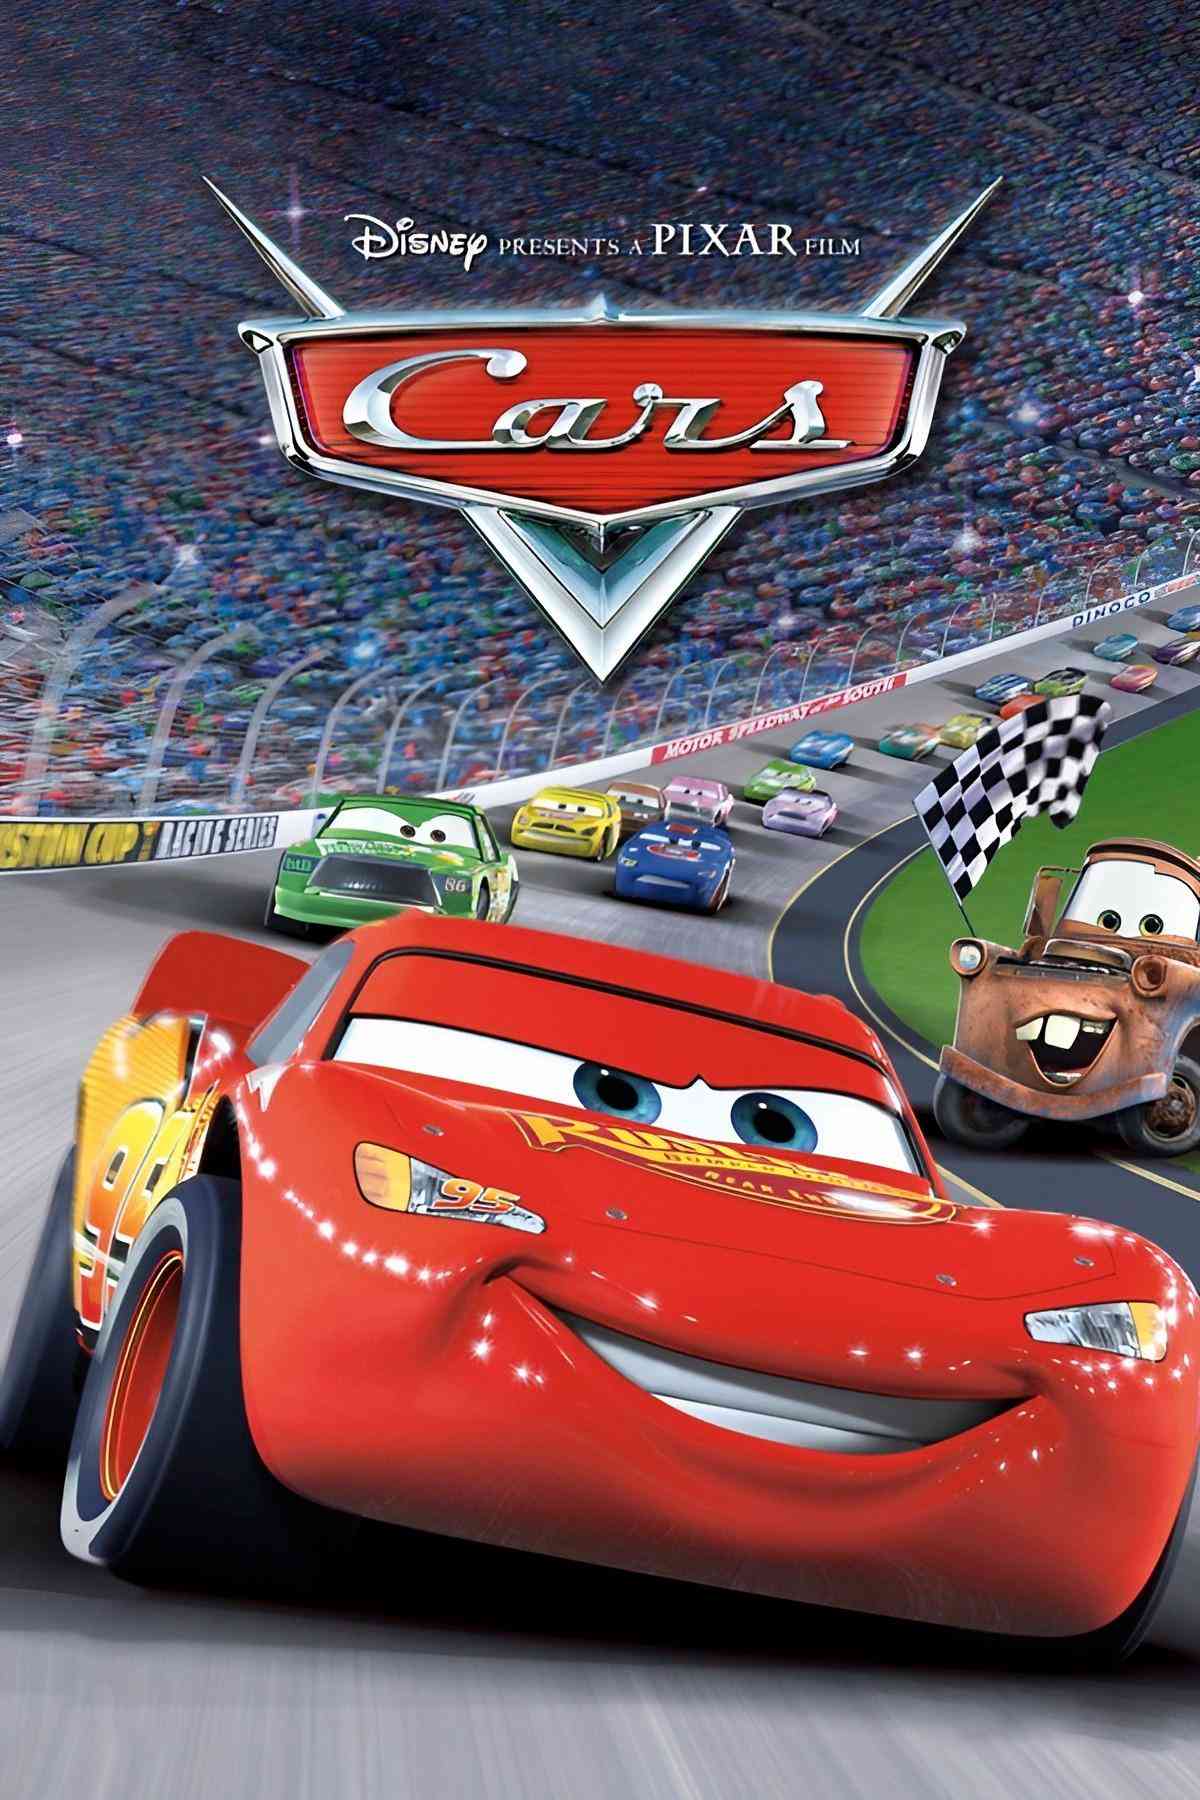 FULL MOVIE: Cars (2006) [Adventure]